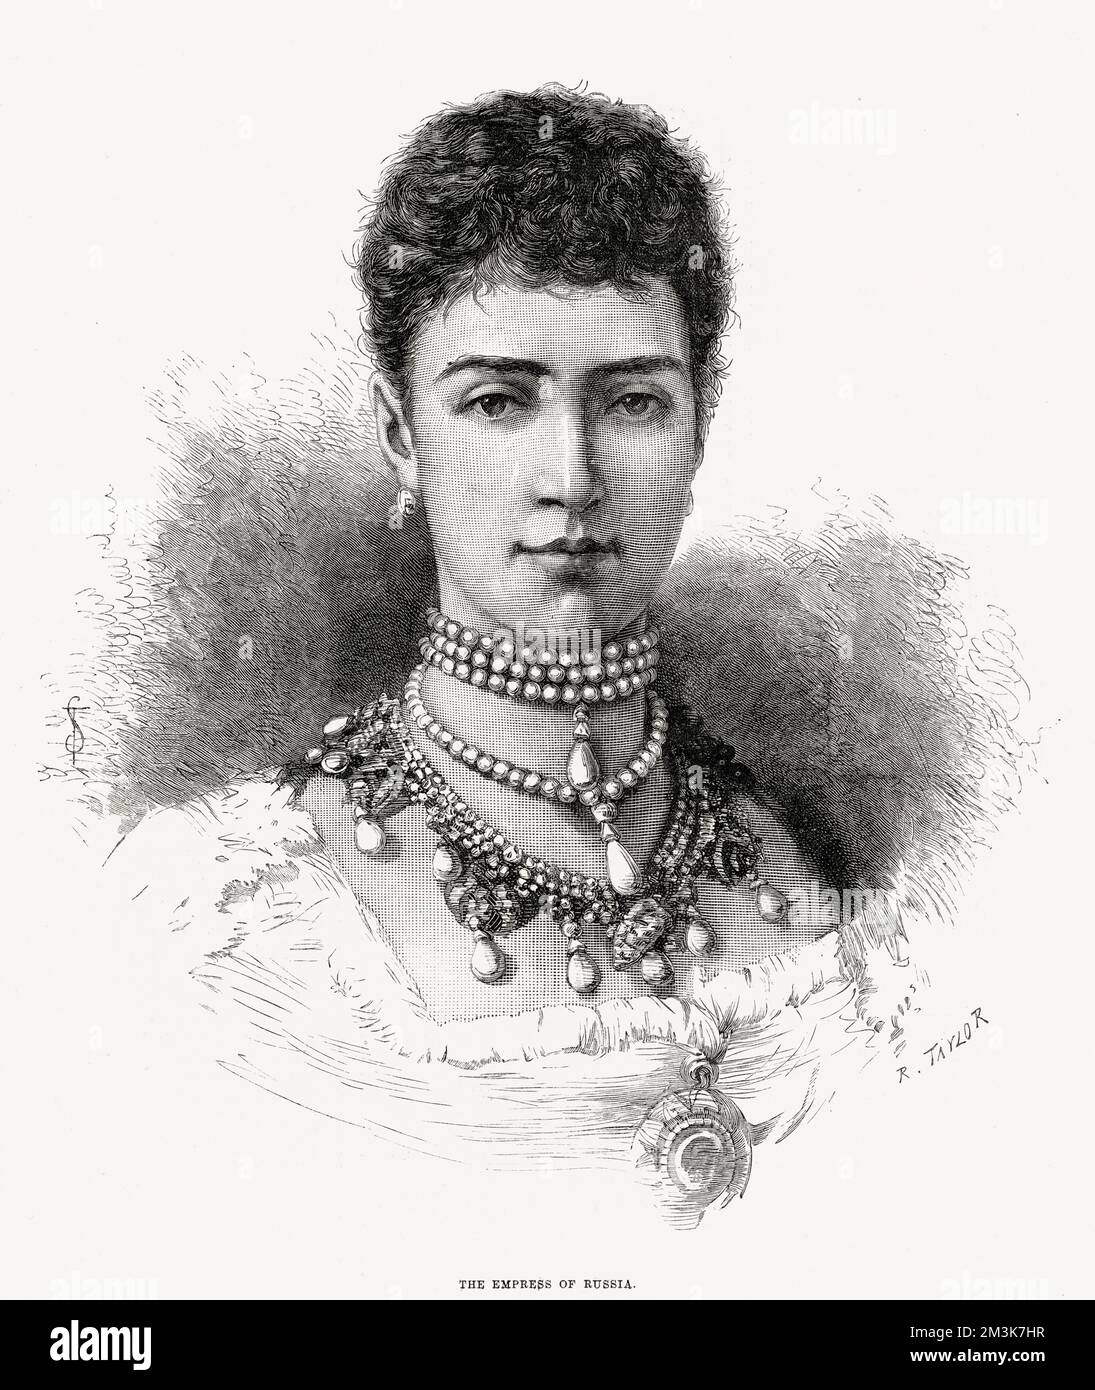 Tsaritsa Maria Feodorovna of Russia (1847 - 1928), wife of Tsar Alexander III, mother of Tsar Nicholas II and sister of Queen Alexandra of Great Britain. Stock Photo